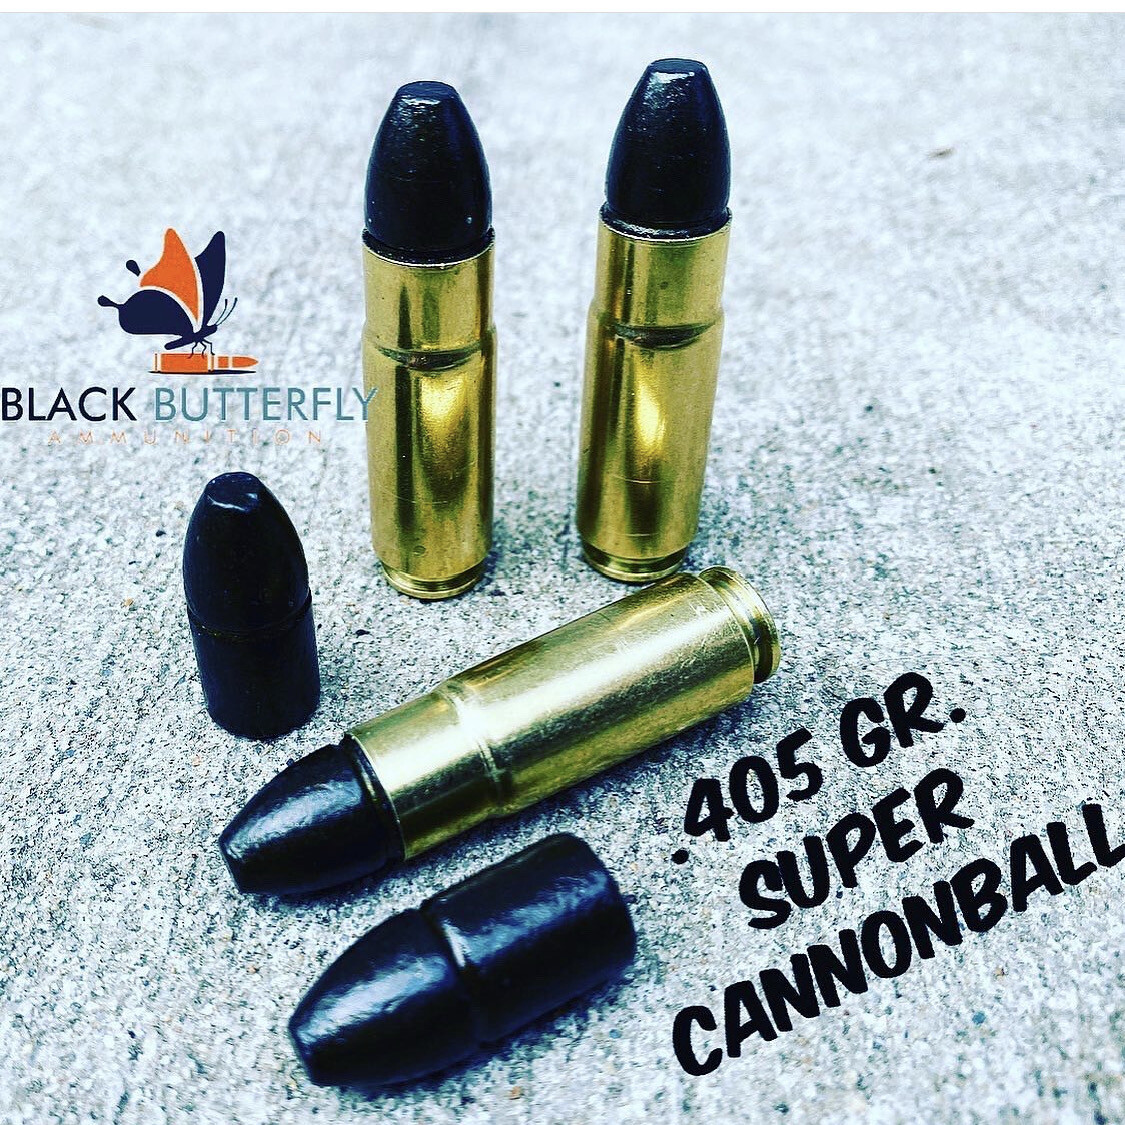 Black Butterfly Ammunition Premium, .458 SOCOM, 405 gr, 5 Rounds, Hi-Tek Coated Lead "SUPER CANNONBALL" (SAMPLE PACK)